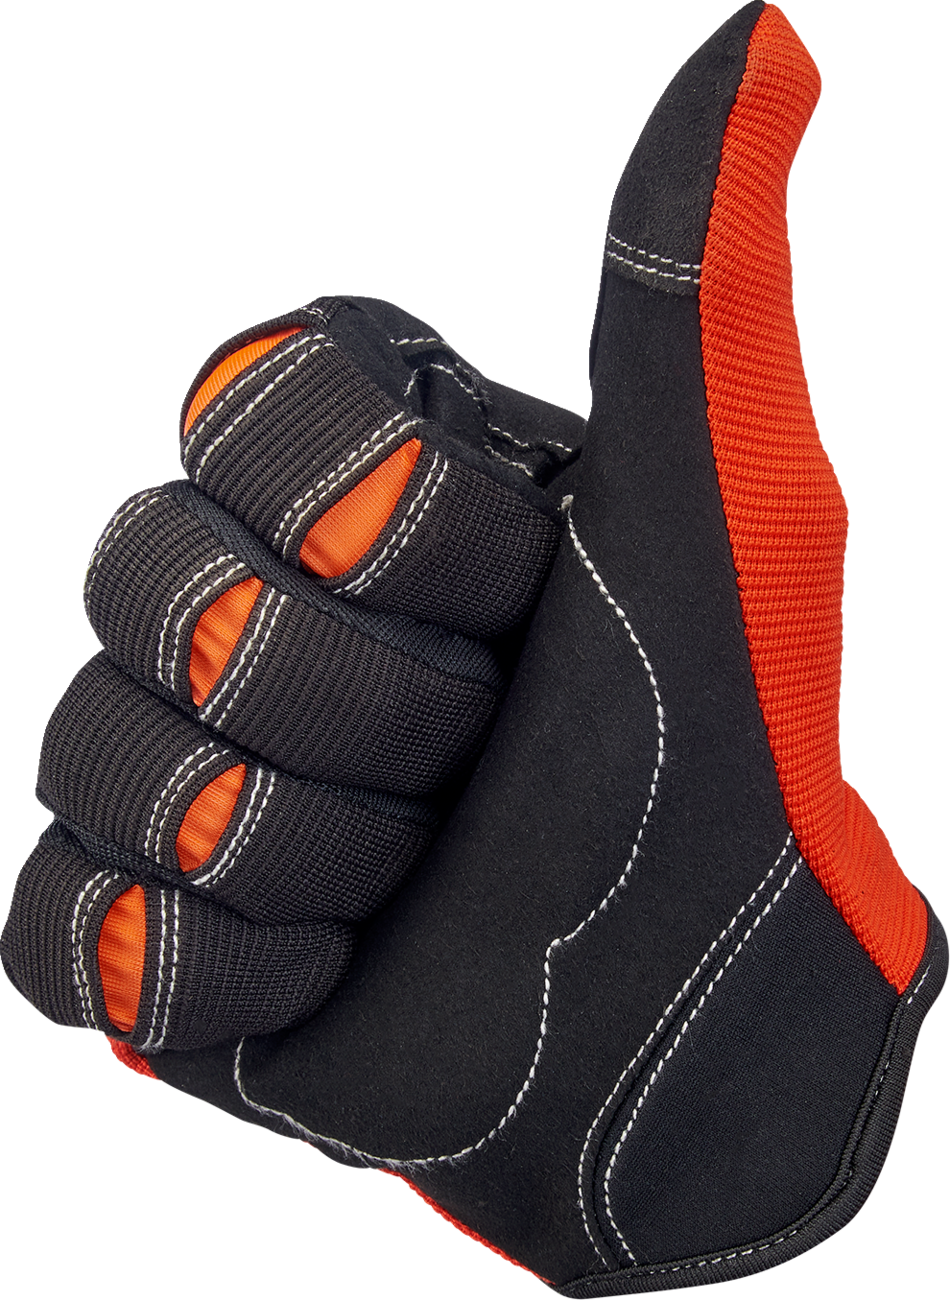 BILTWELL Moto Gloves - Orange/Black - XS 1501-0106-001